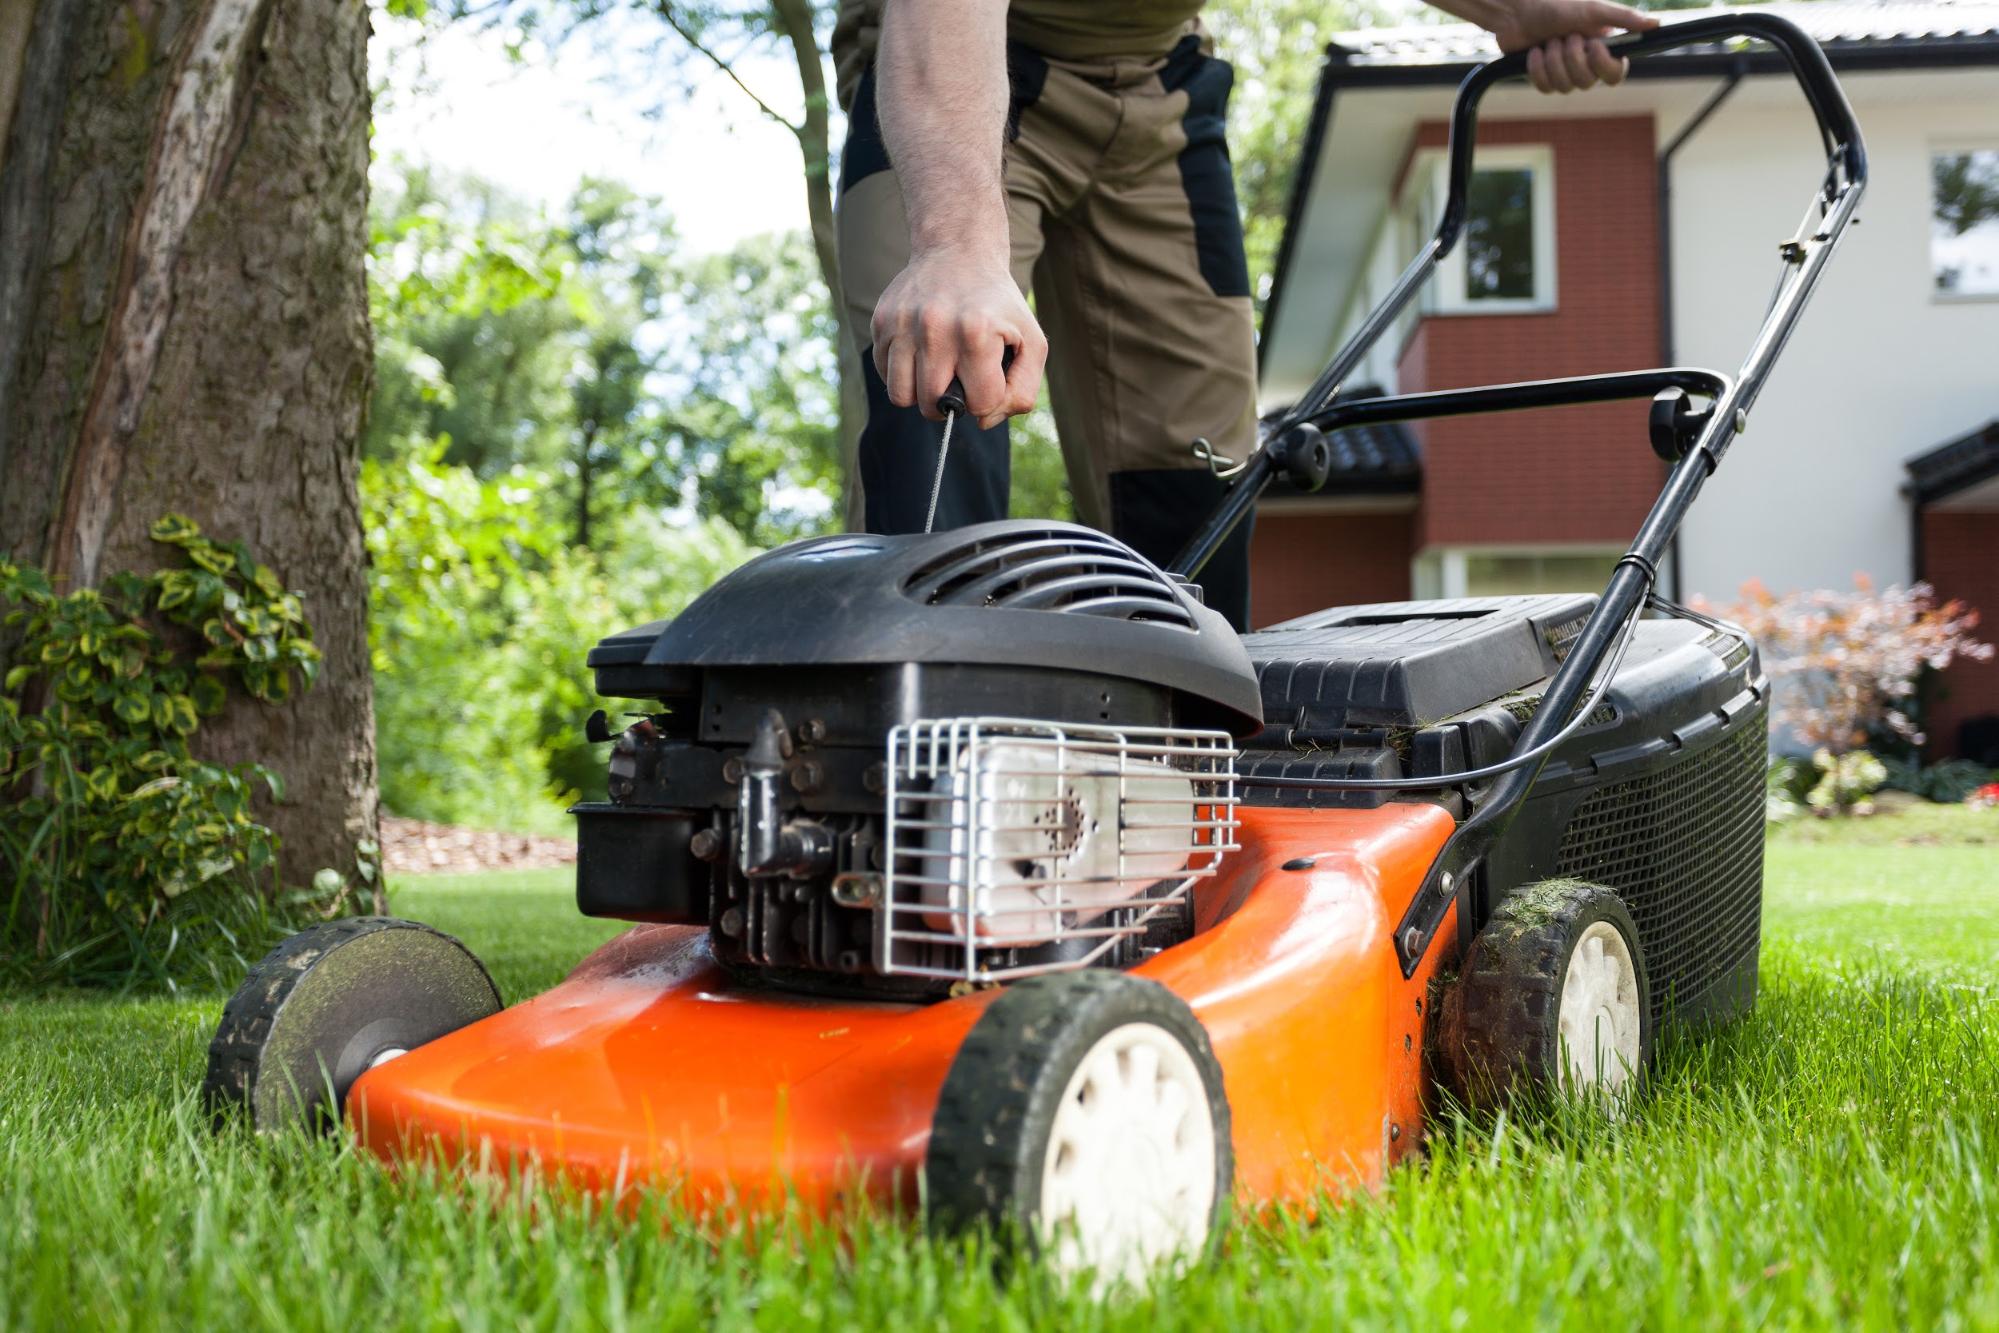 A person starts a mower to trim their lawn.